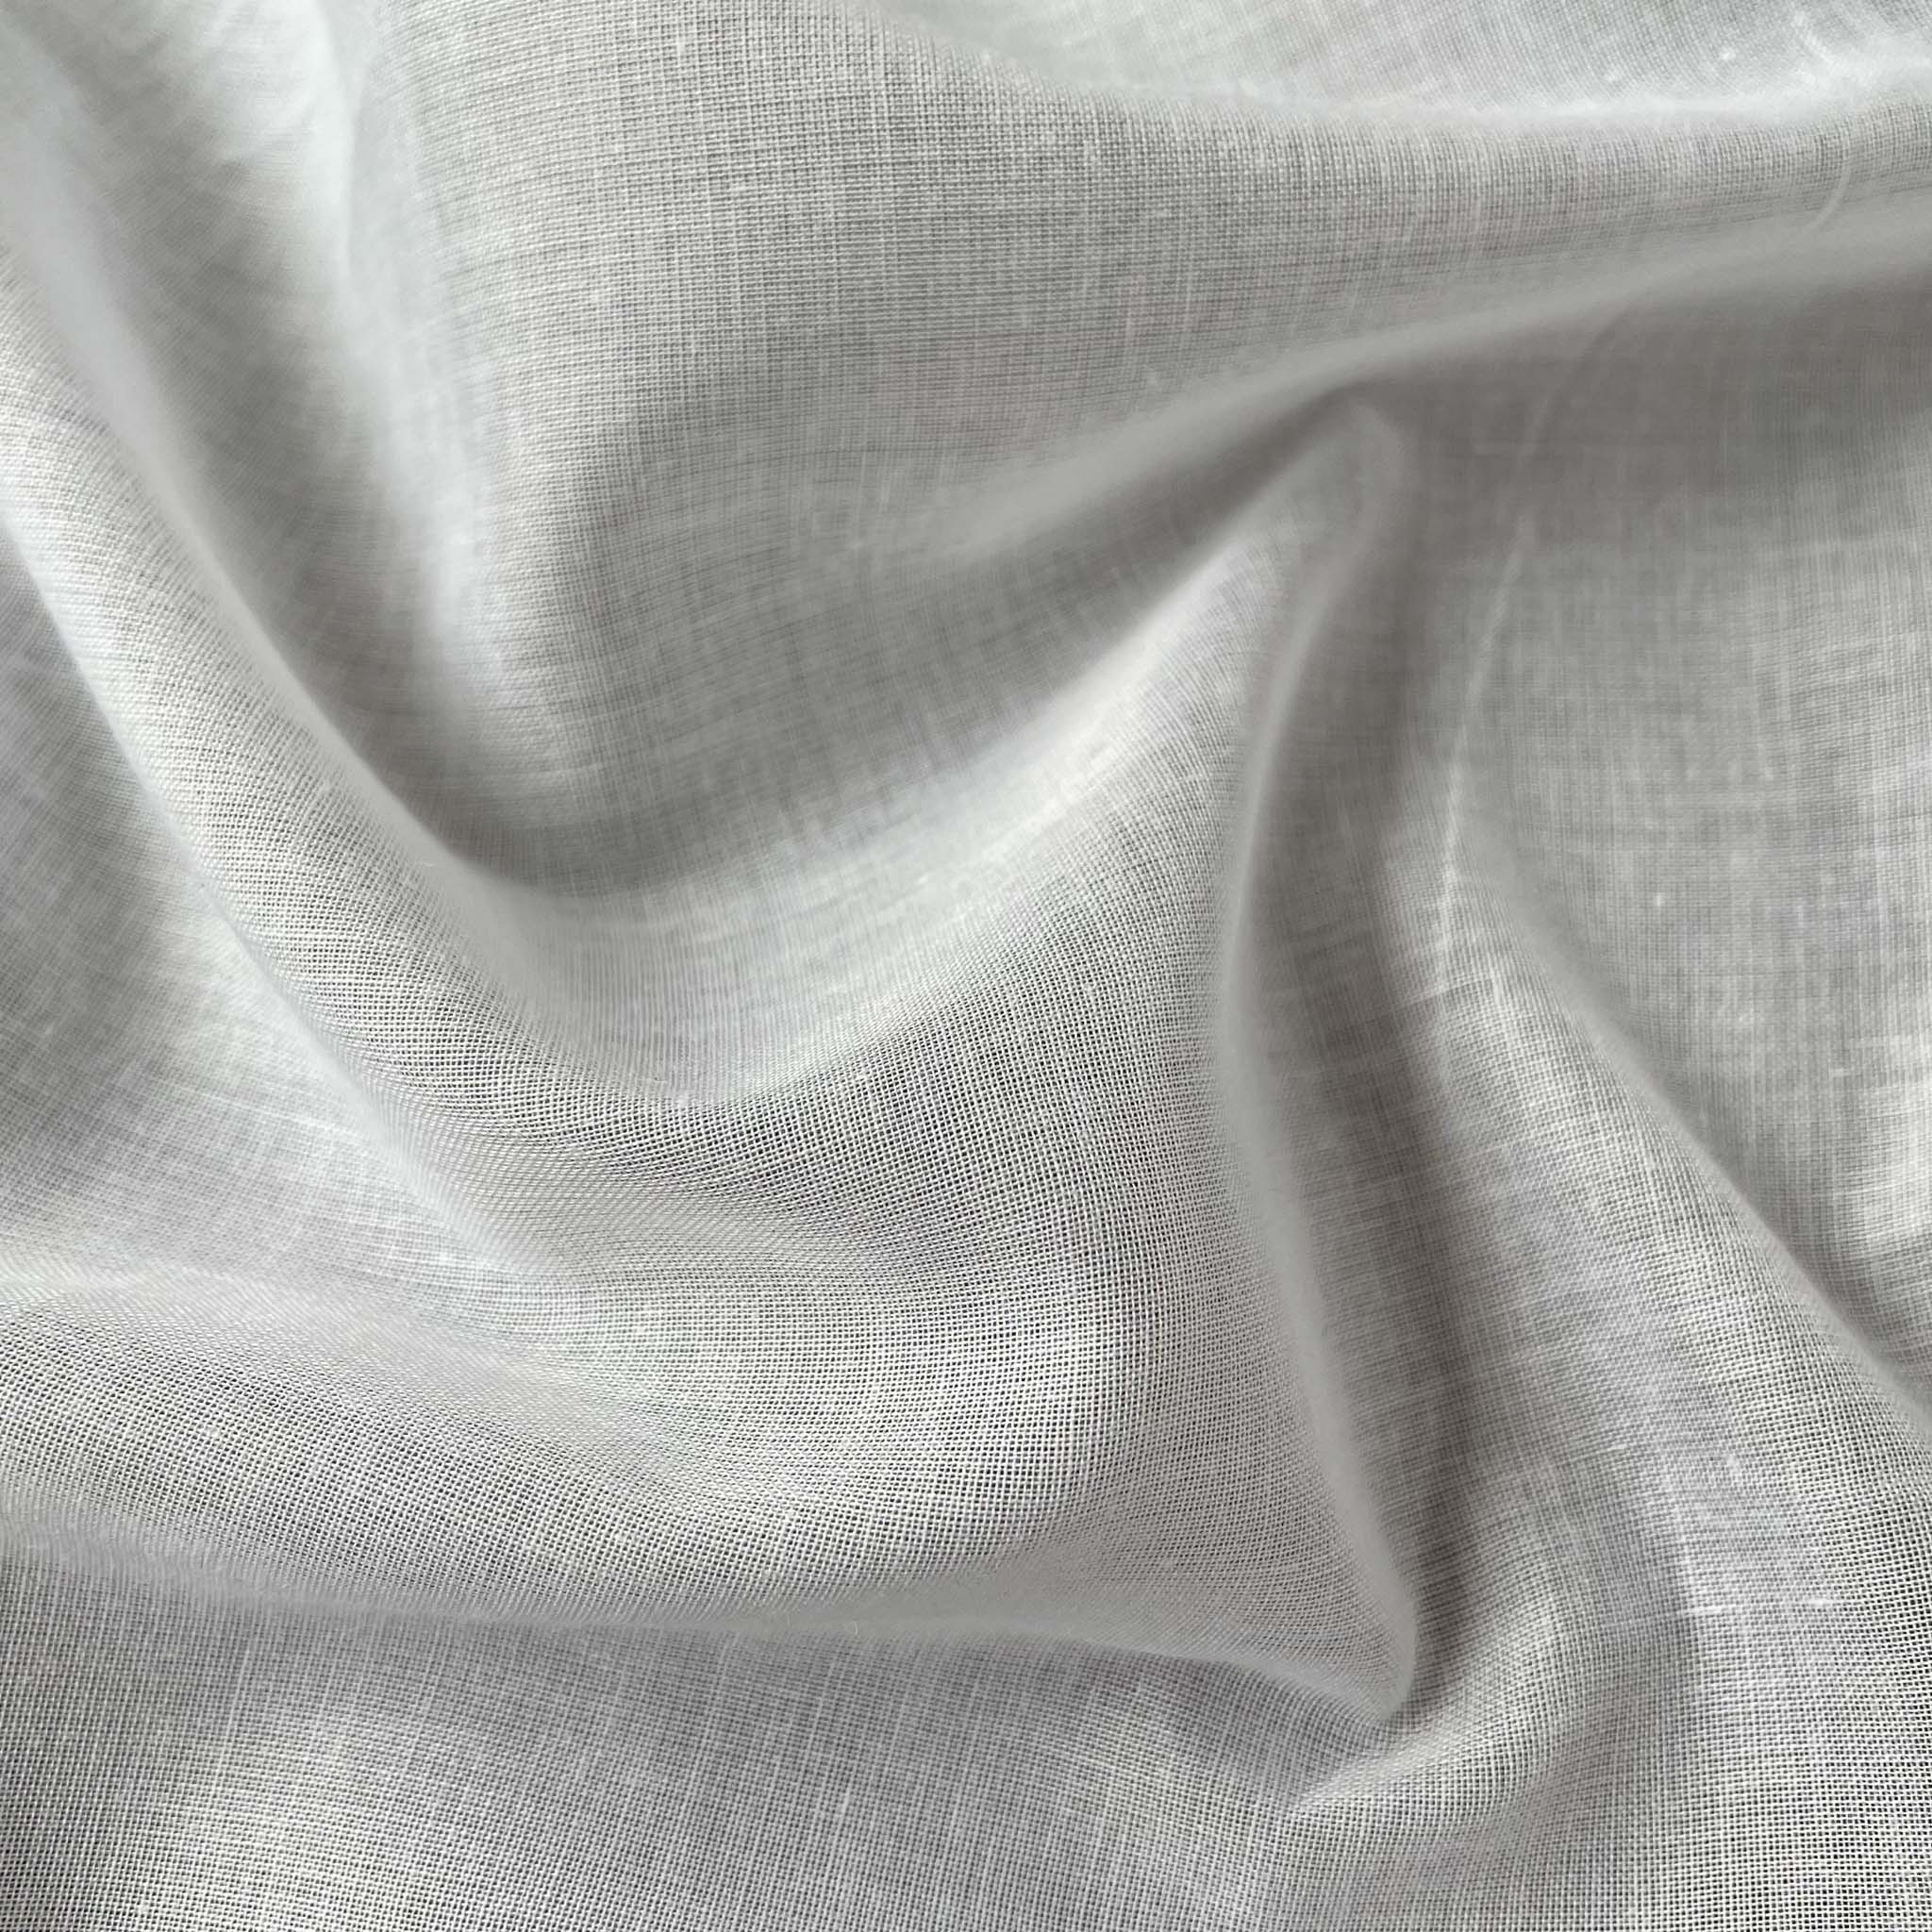 Plain 36-42 Linen Cotton Fabric, GSM: 150-350, Packaging Type: Roll